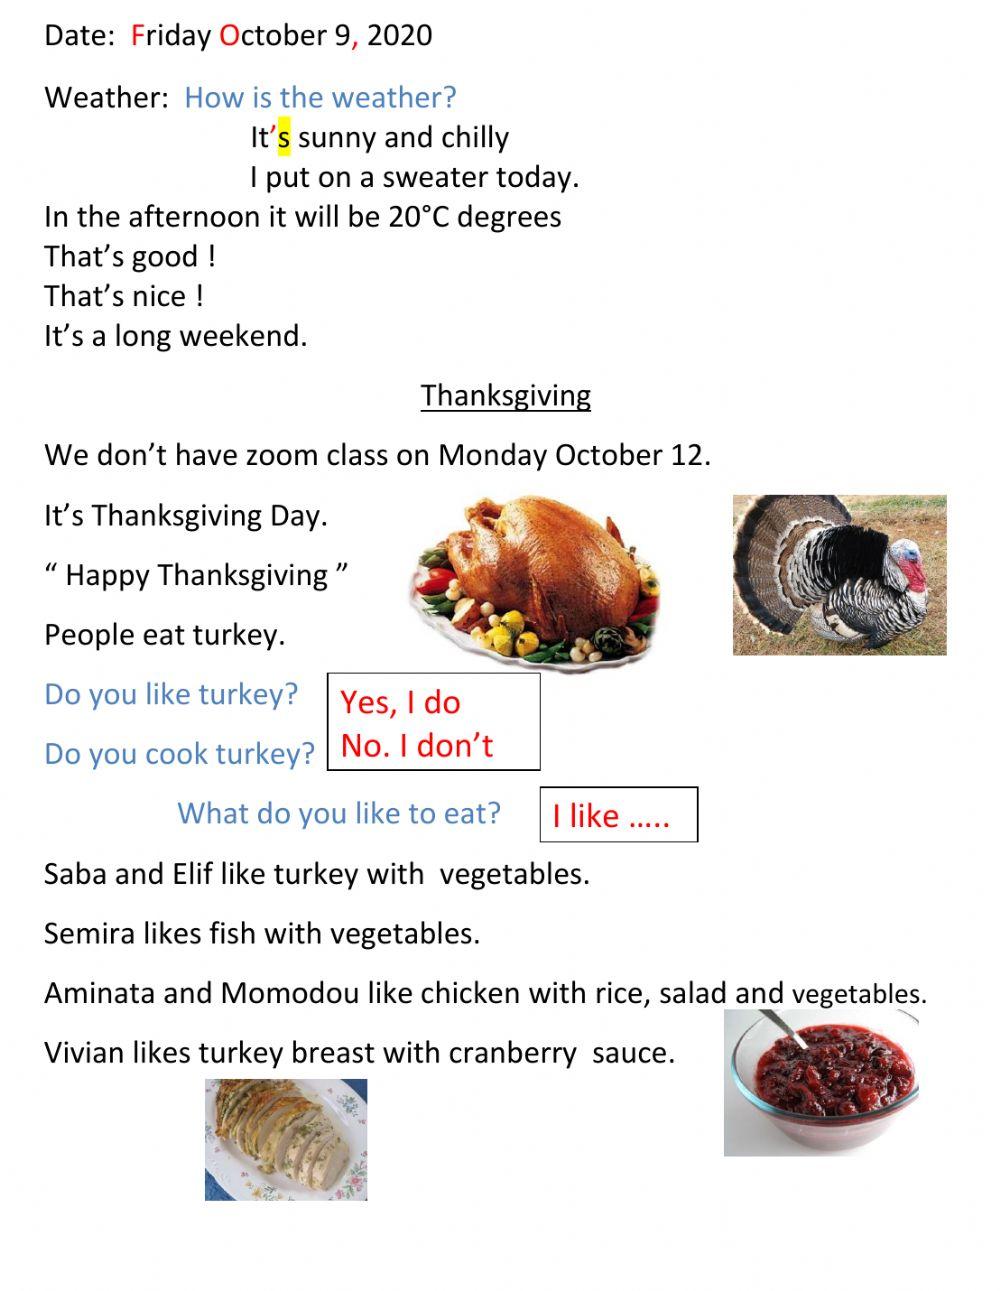 Thanksgiving Food